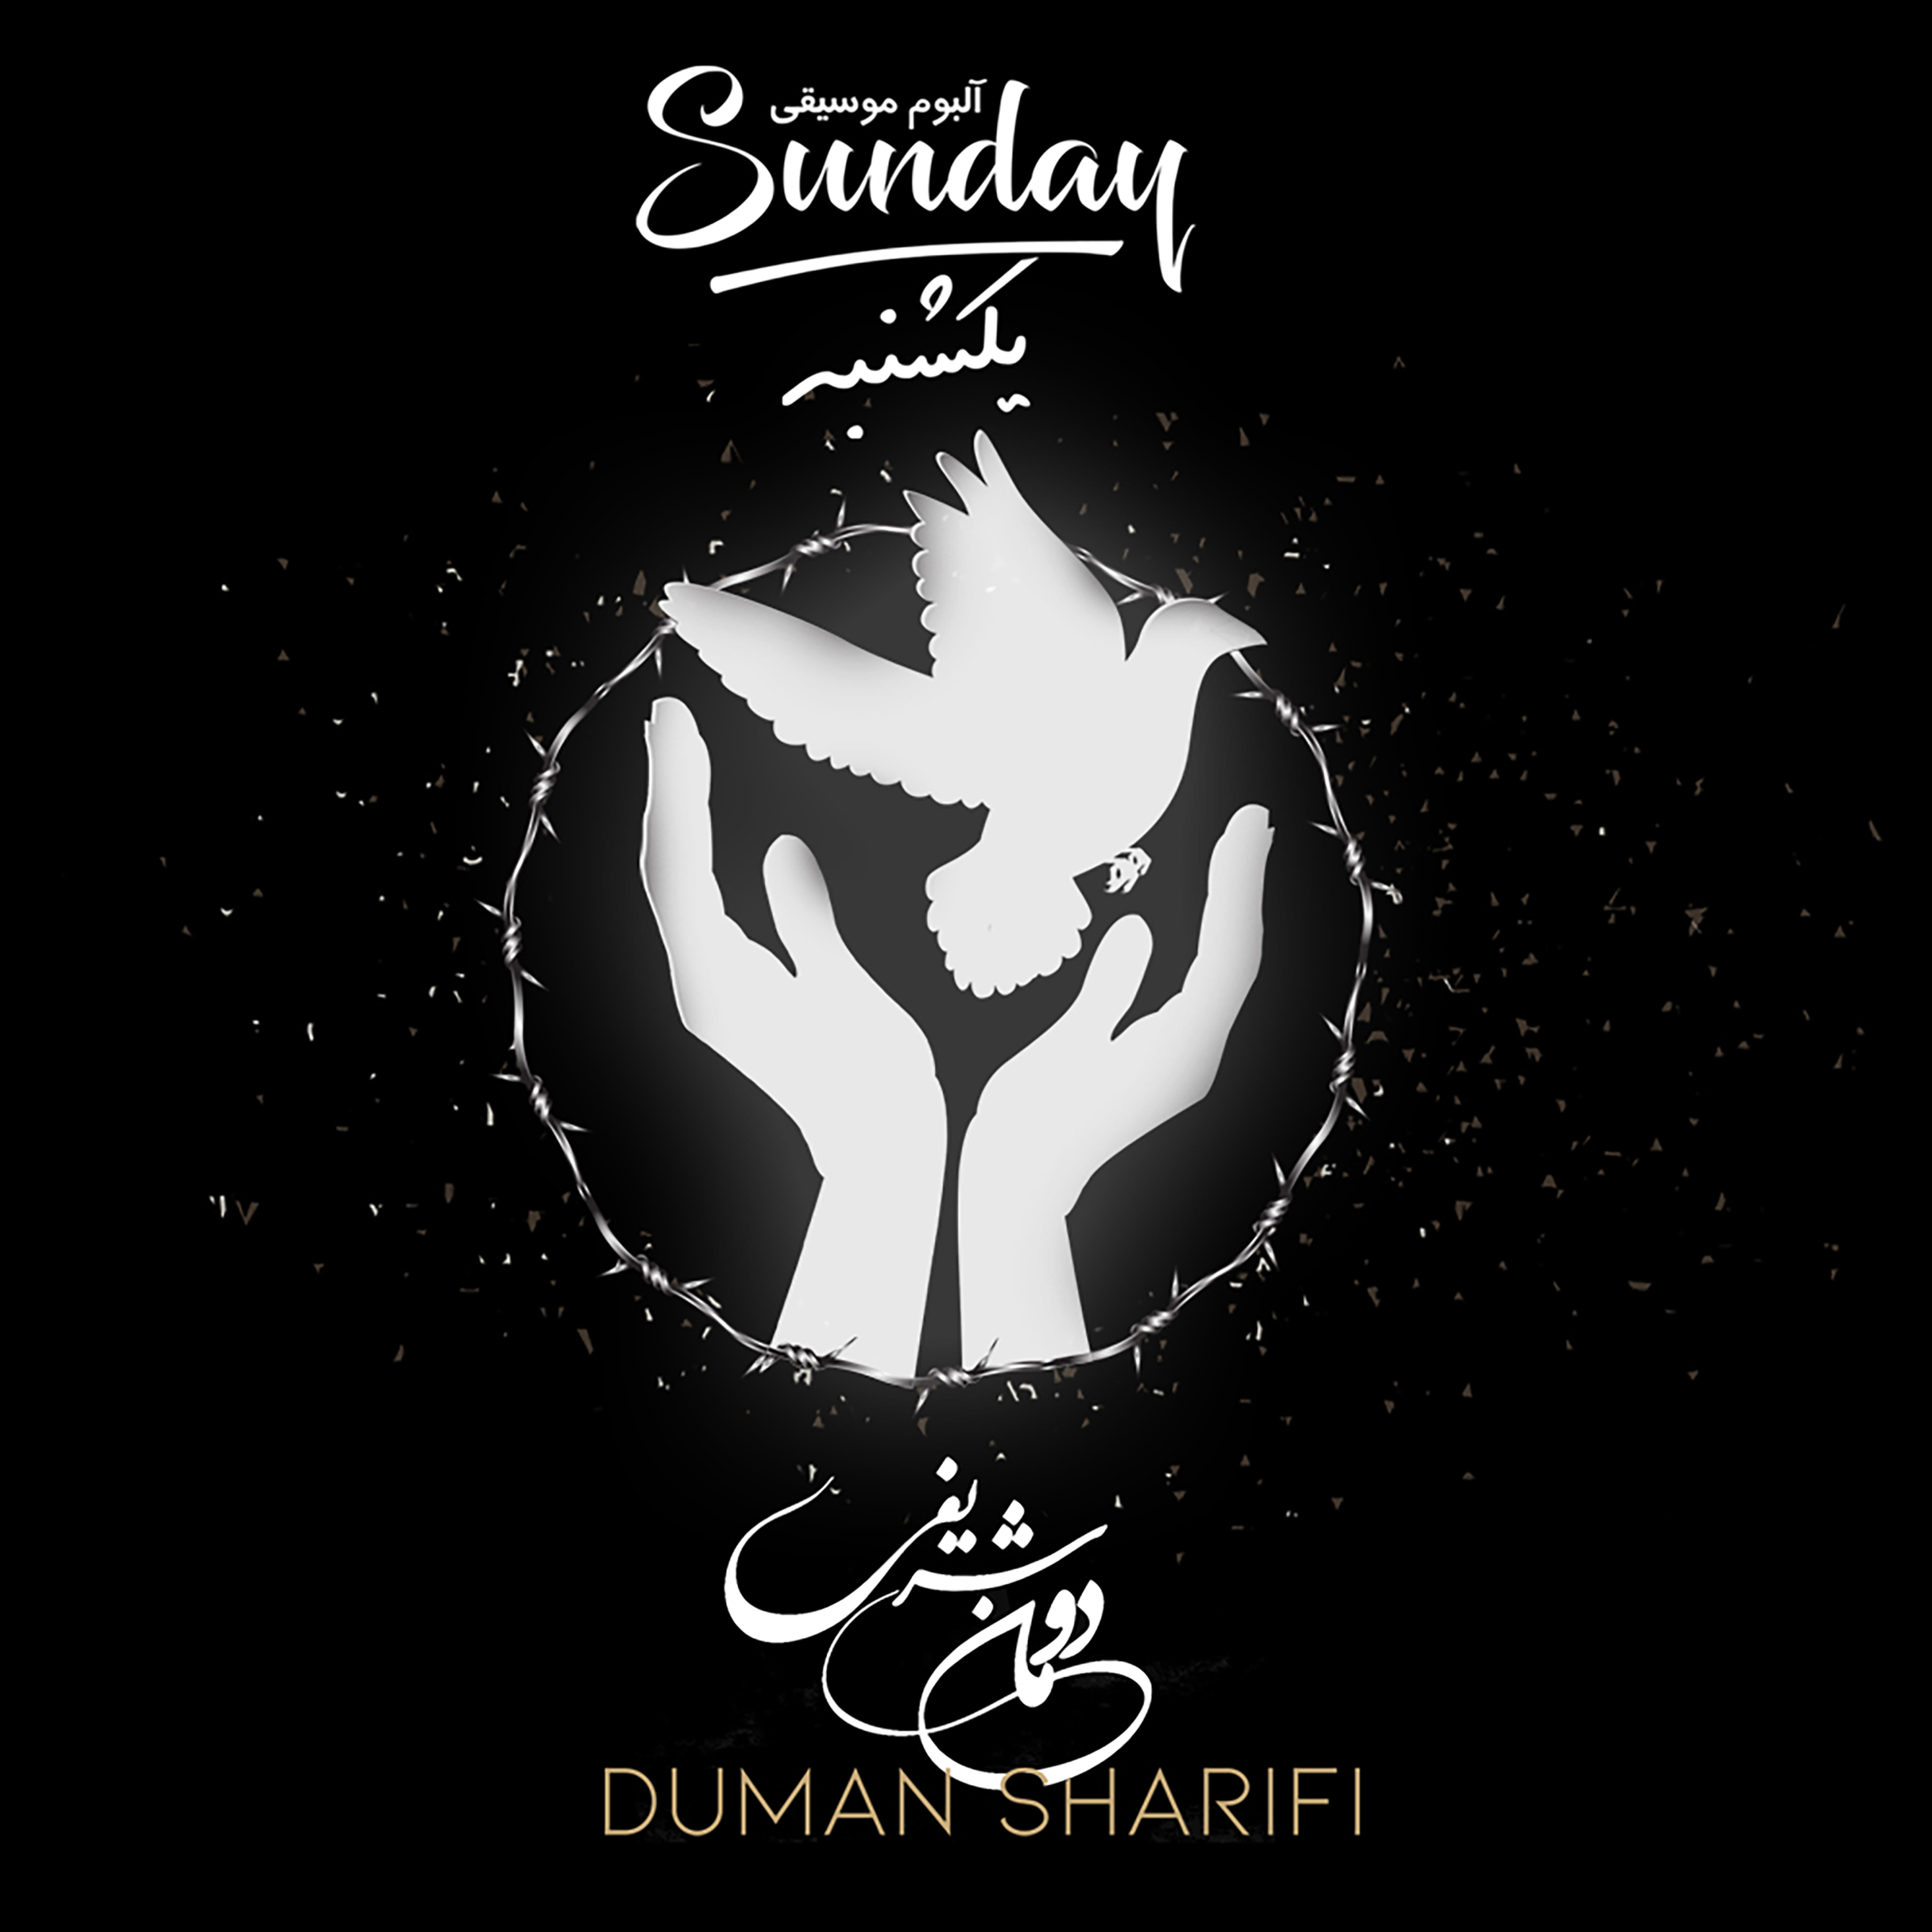  دانلود آهنگ جدید دومان شریفی - روسری آبی | Download New Music By Duman Sharifi - Blue Scarf